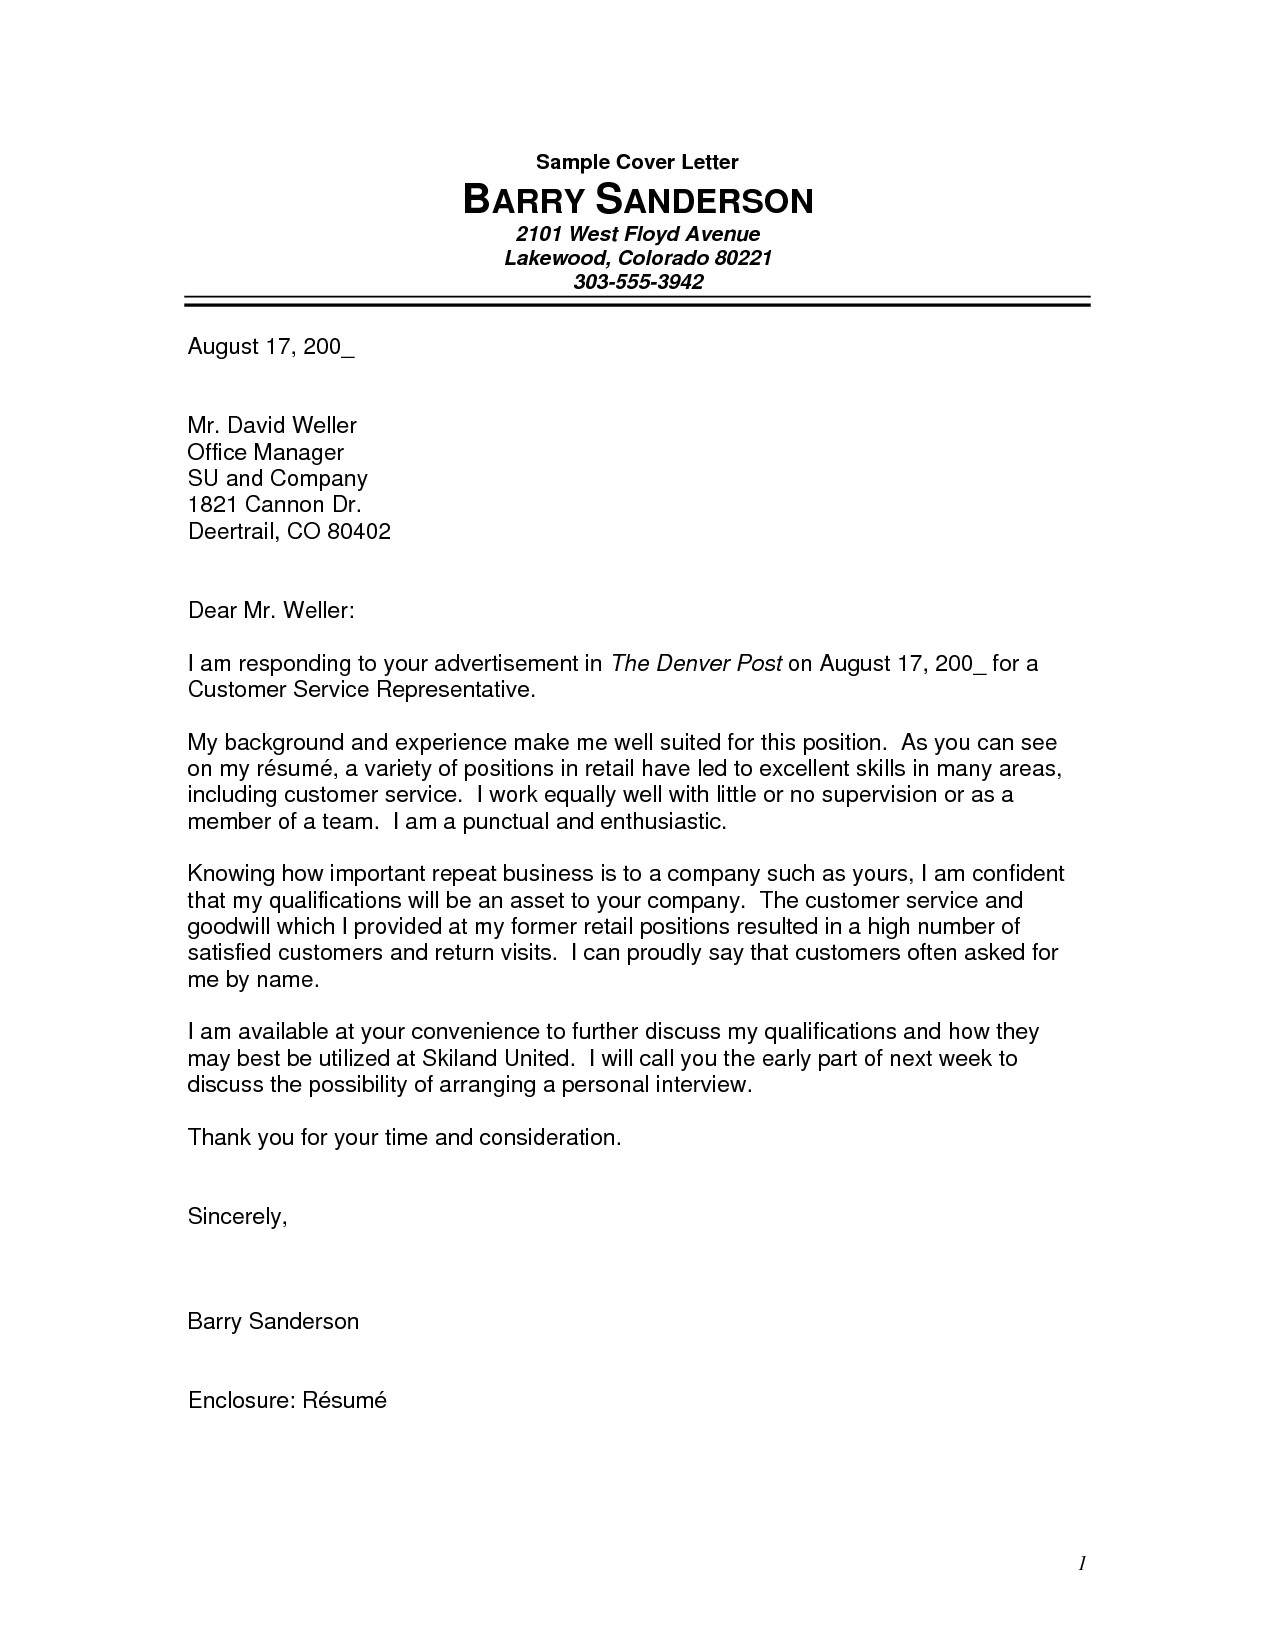 cover letter for customer service representative no experience